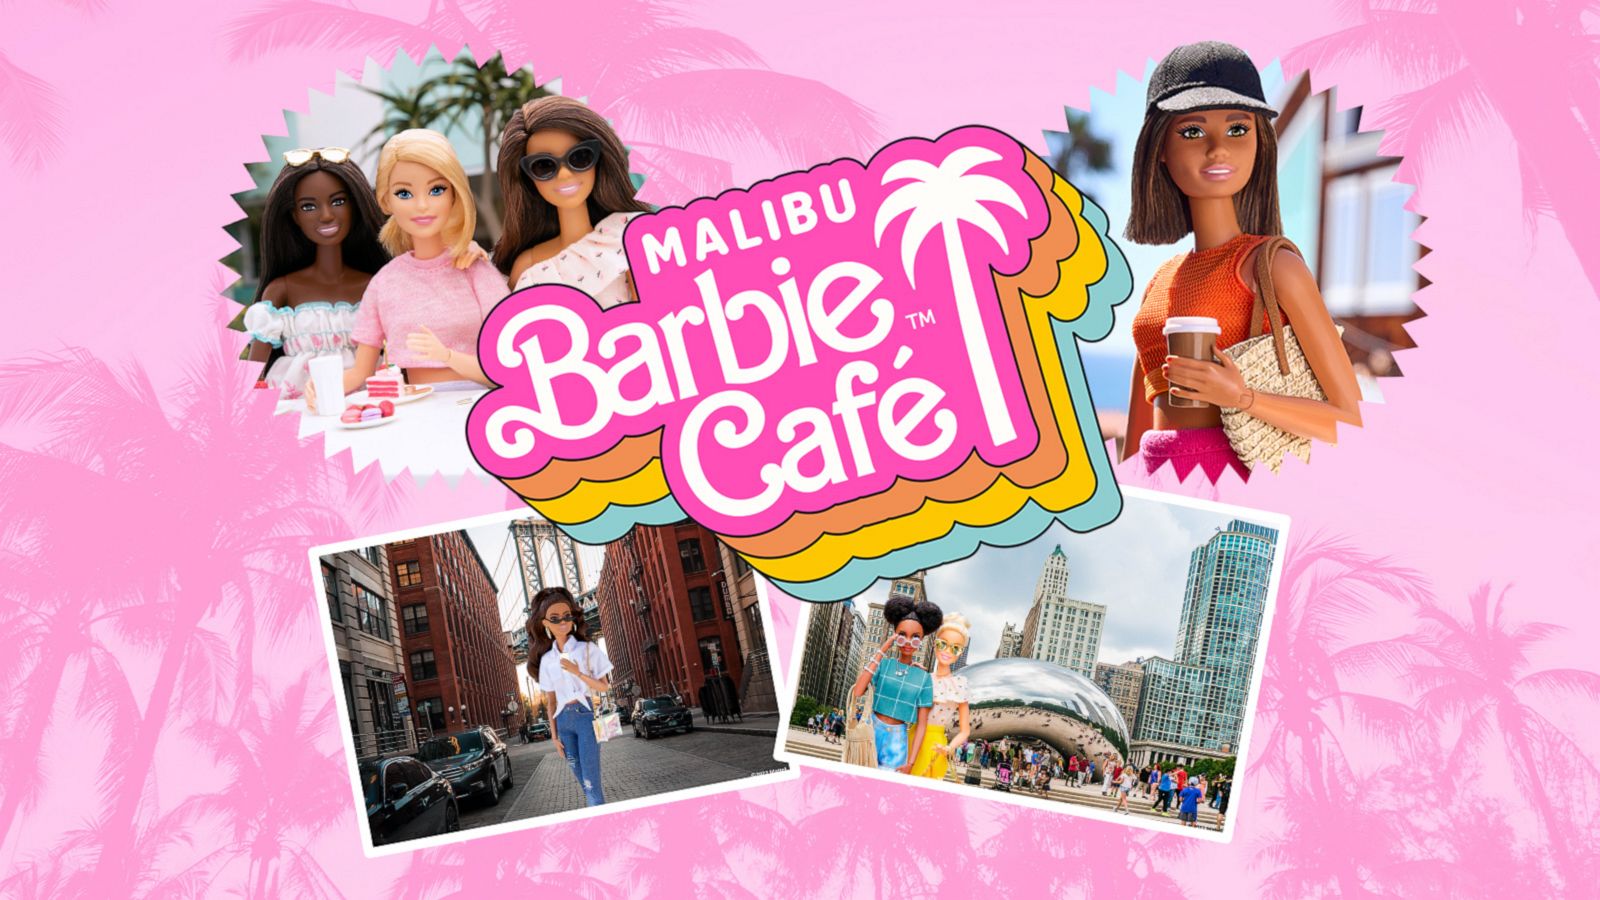 laden Cordelia Baars An immersive Malibu Barbie pop-up restaurant is coming to 2 cities this  summer - ABC News